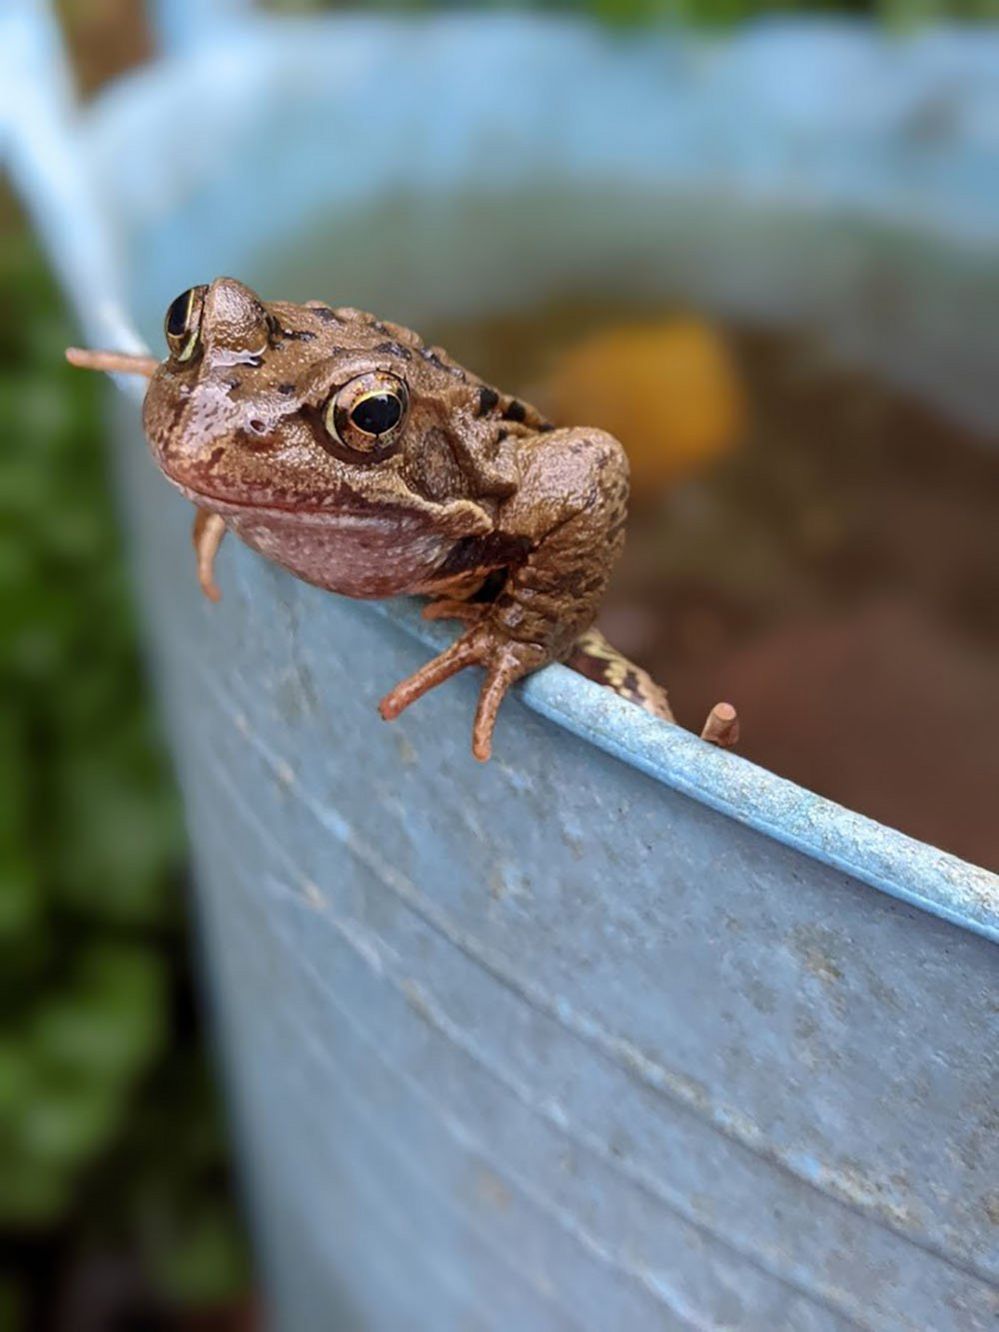 Frog in a bucket